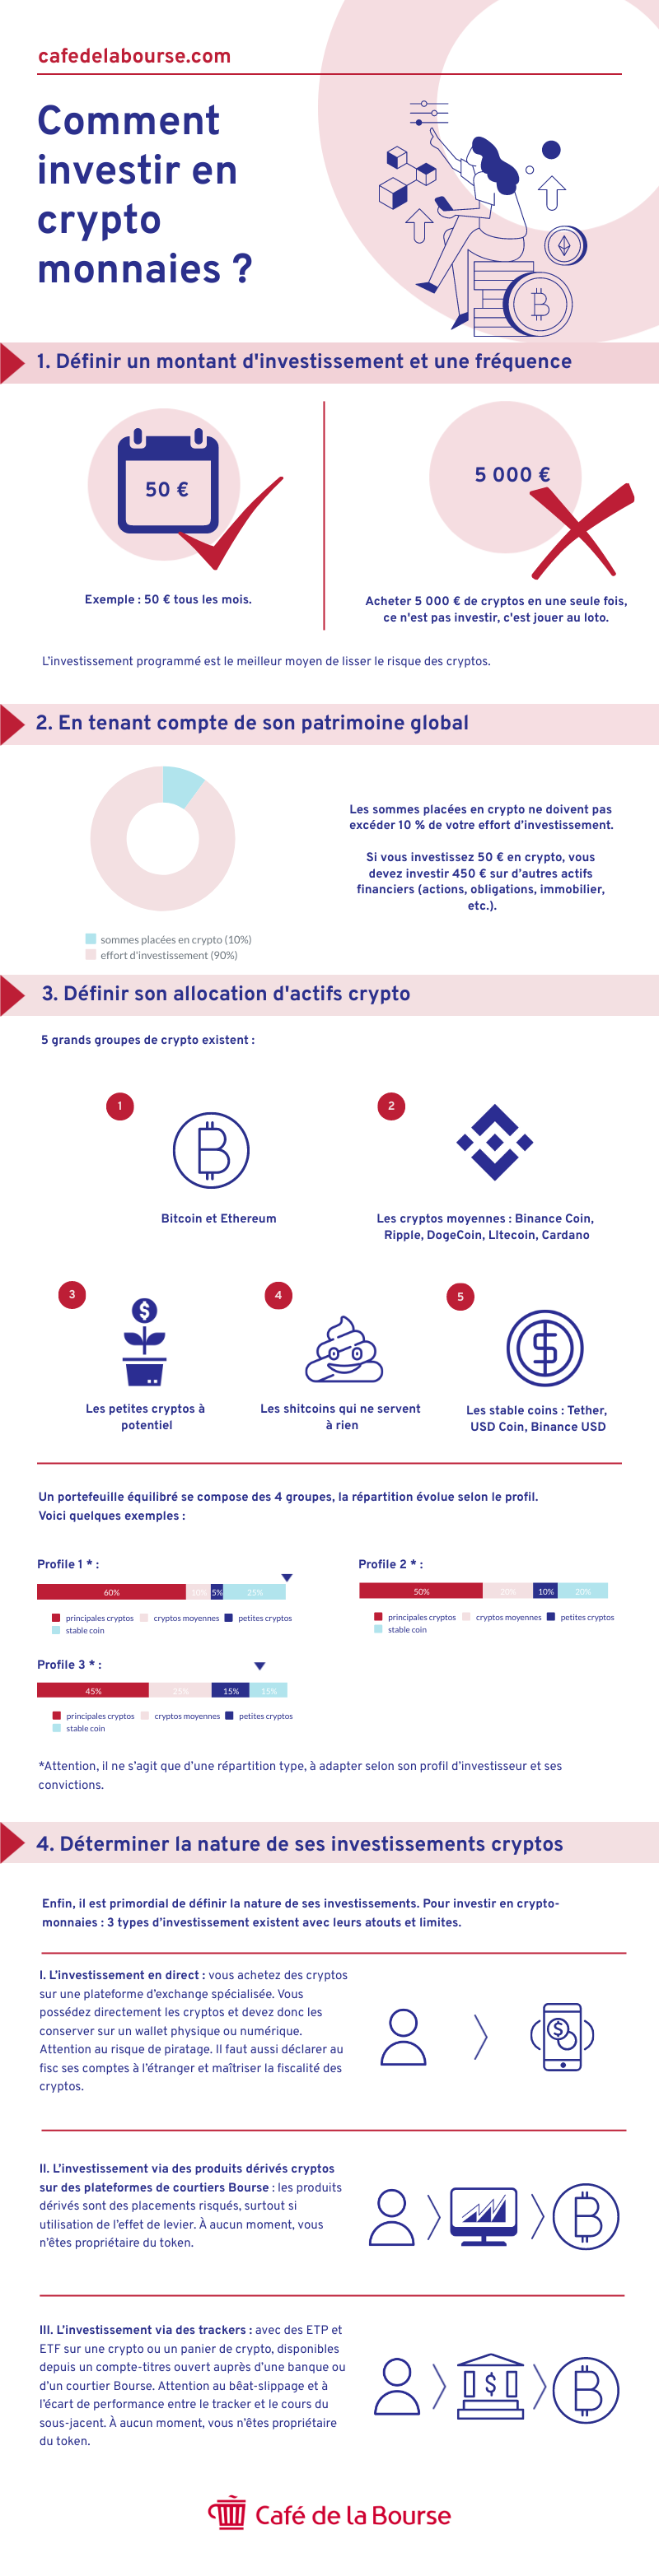 infographie comment investir en crypto monnaies cafedelabourse